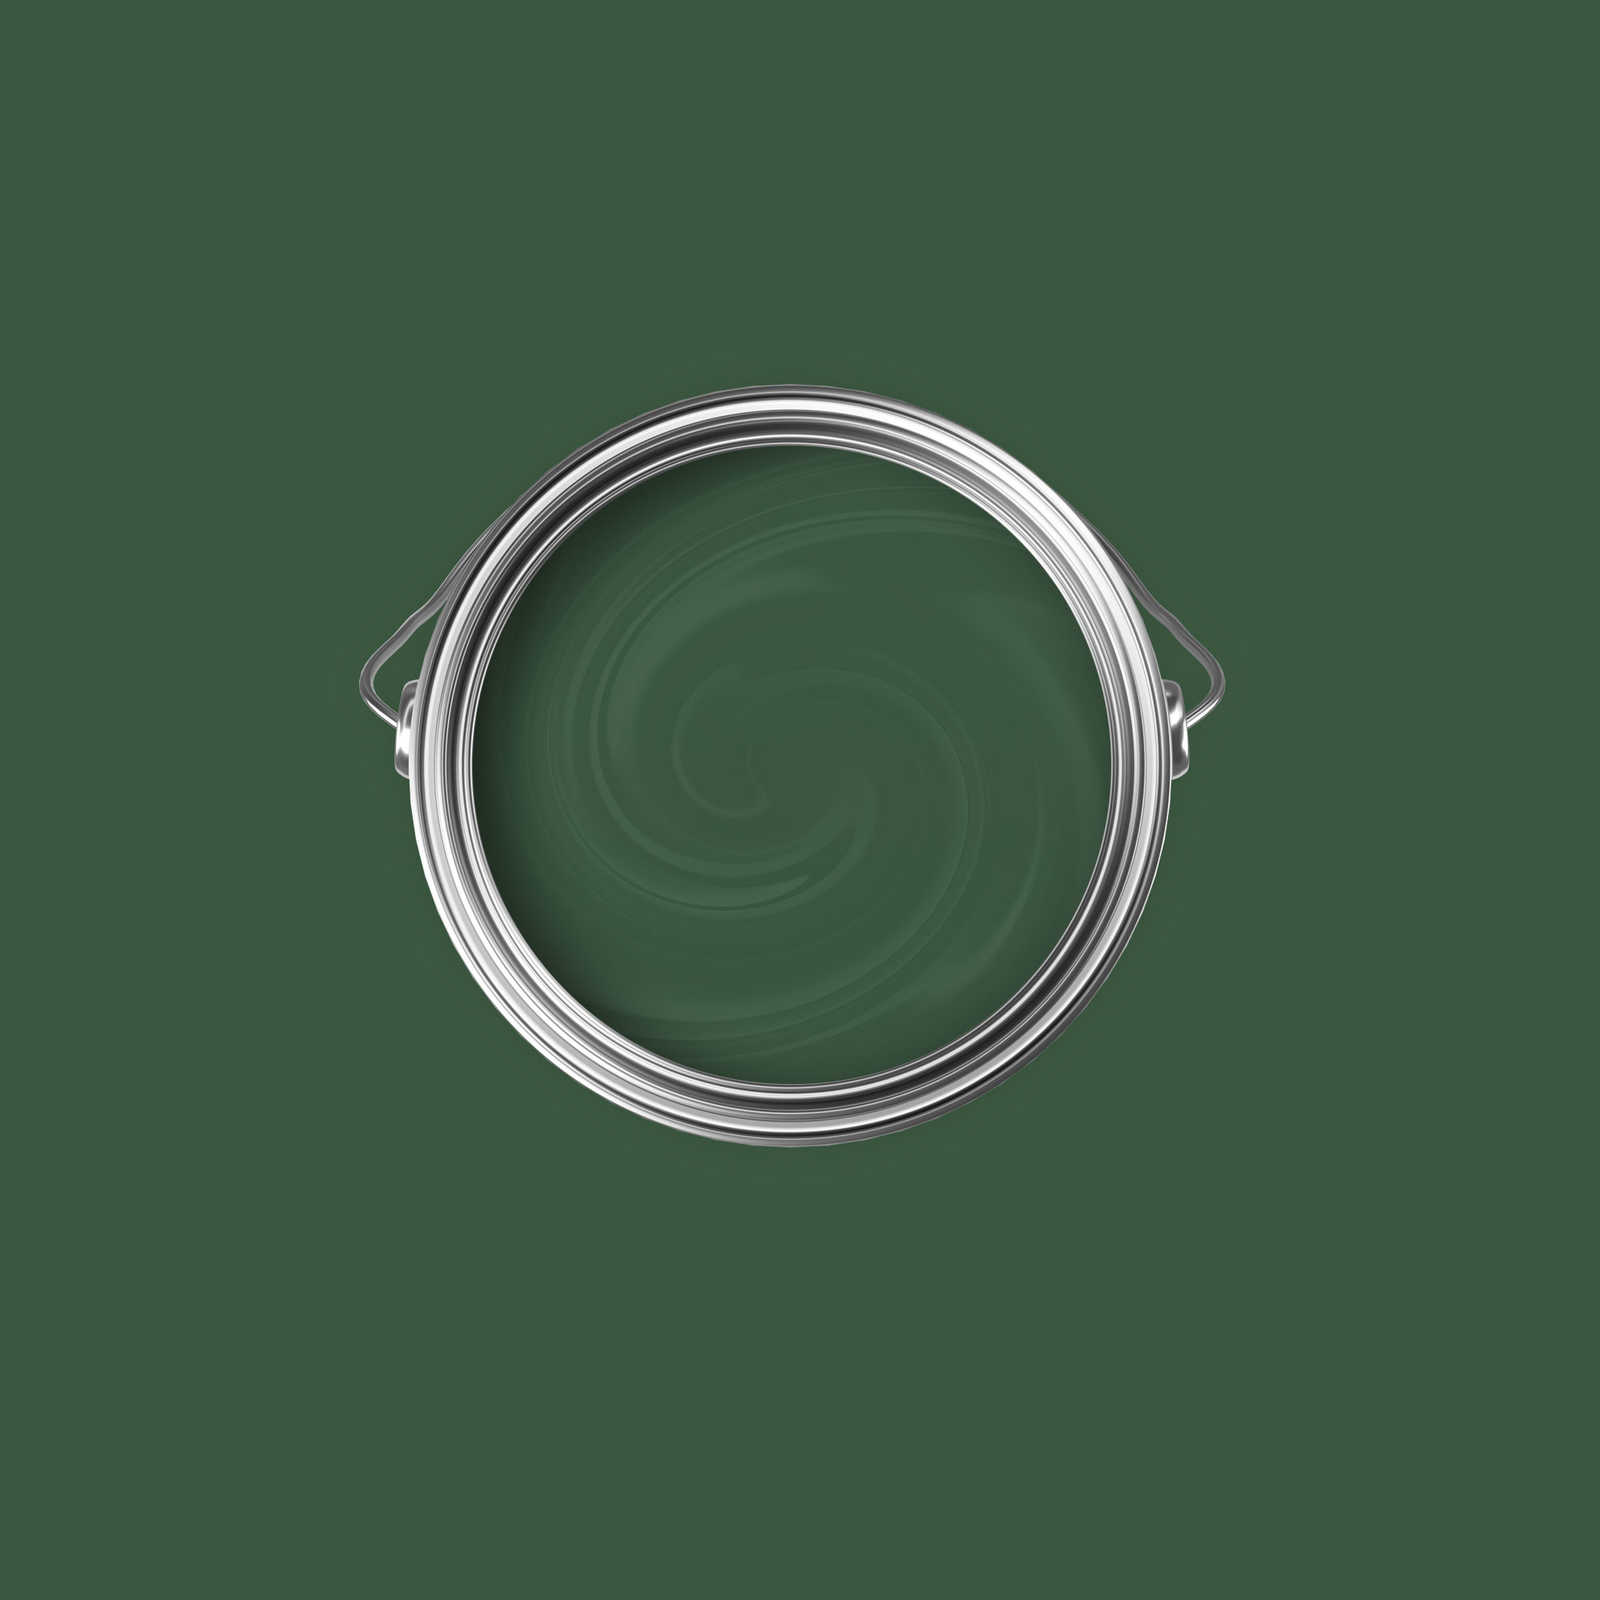             Premium Wandfarbe kräftiges Moosgrün »Gorgeous Green« NW505 – 2,5 Liter
        